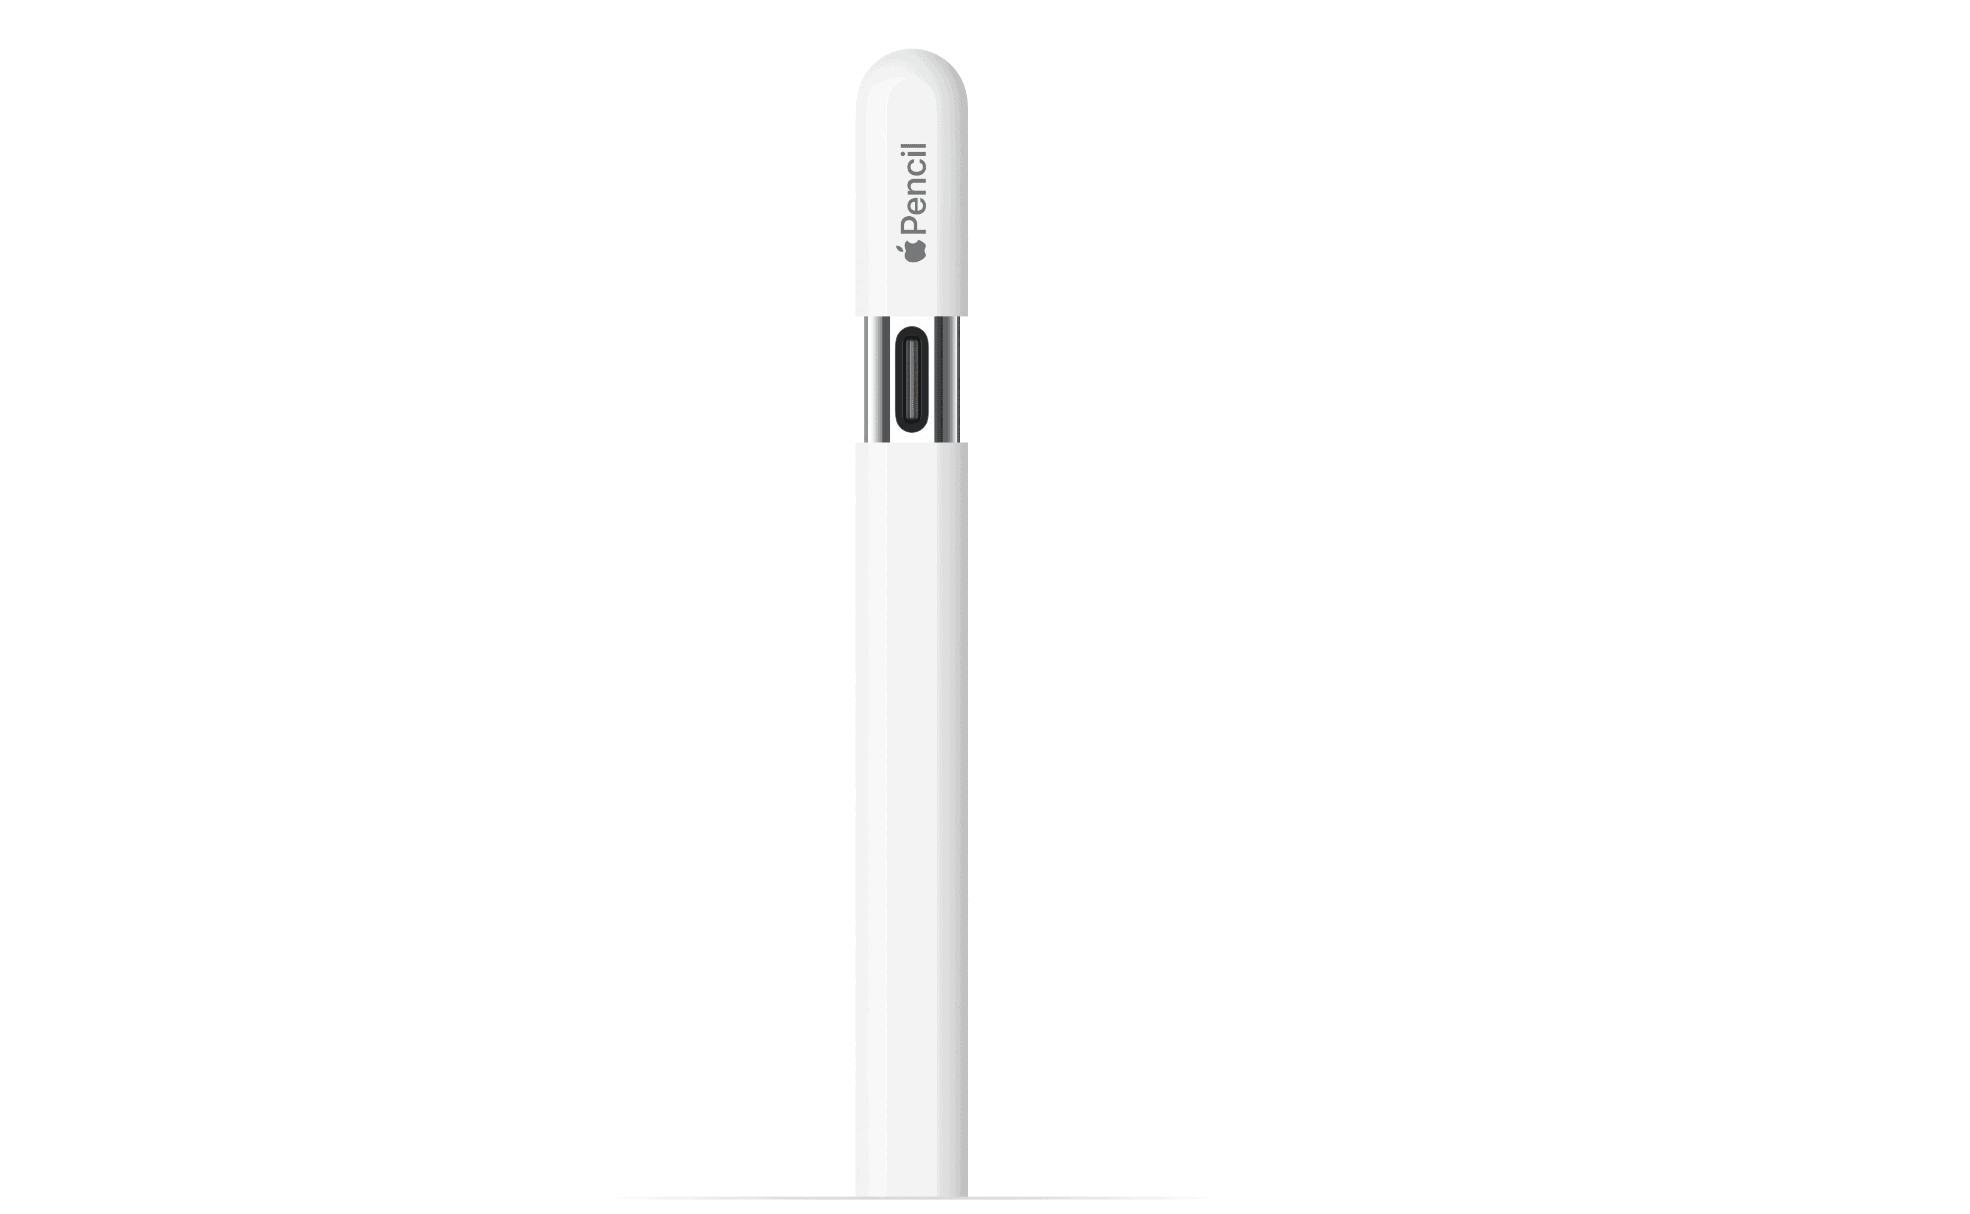 The USB-C Apple Pencil